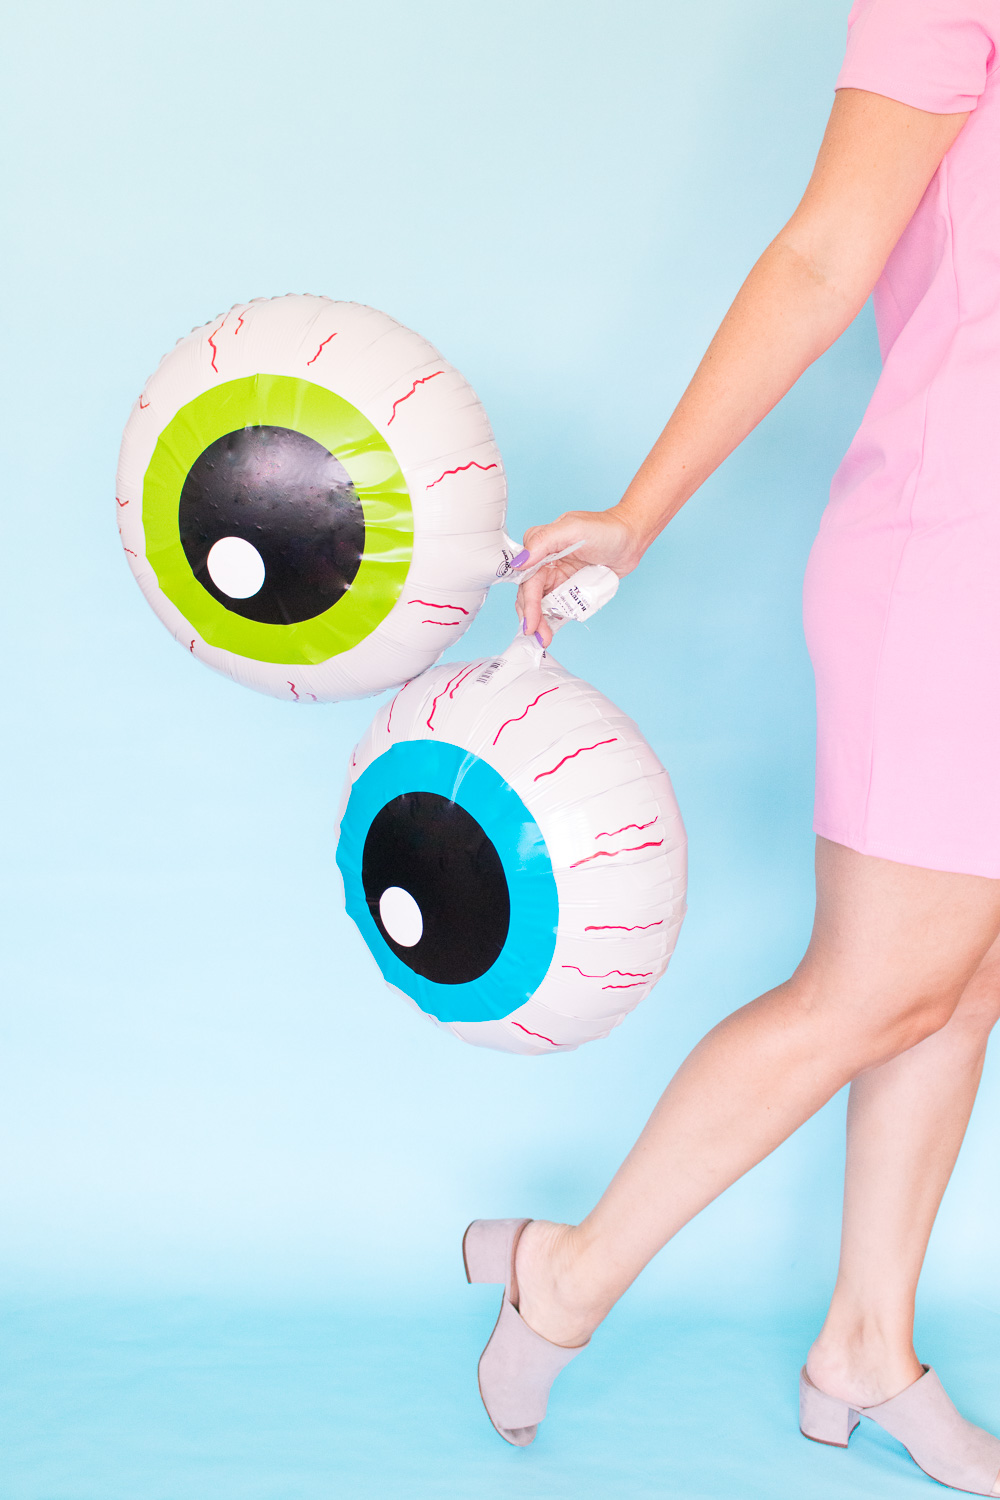 DIY Eyeball Balloons for Halloween | Club Crafted